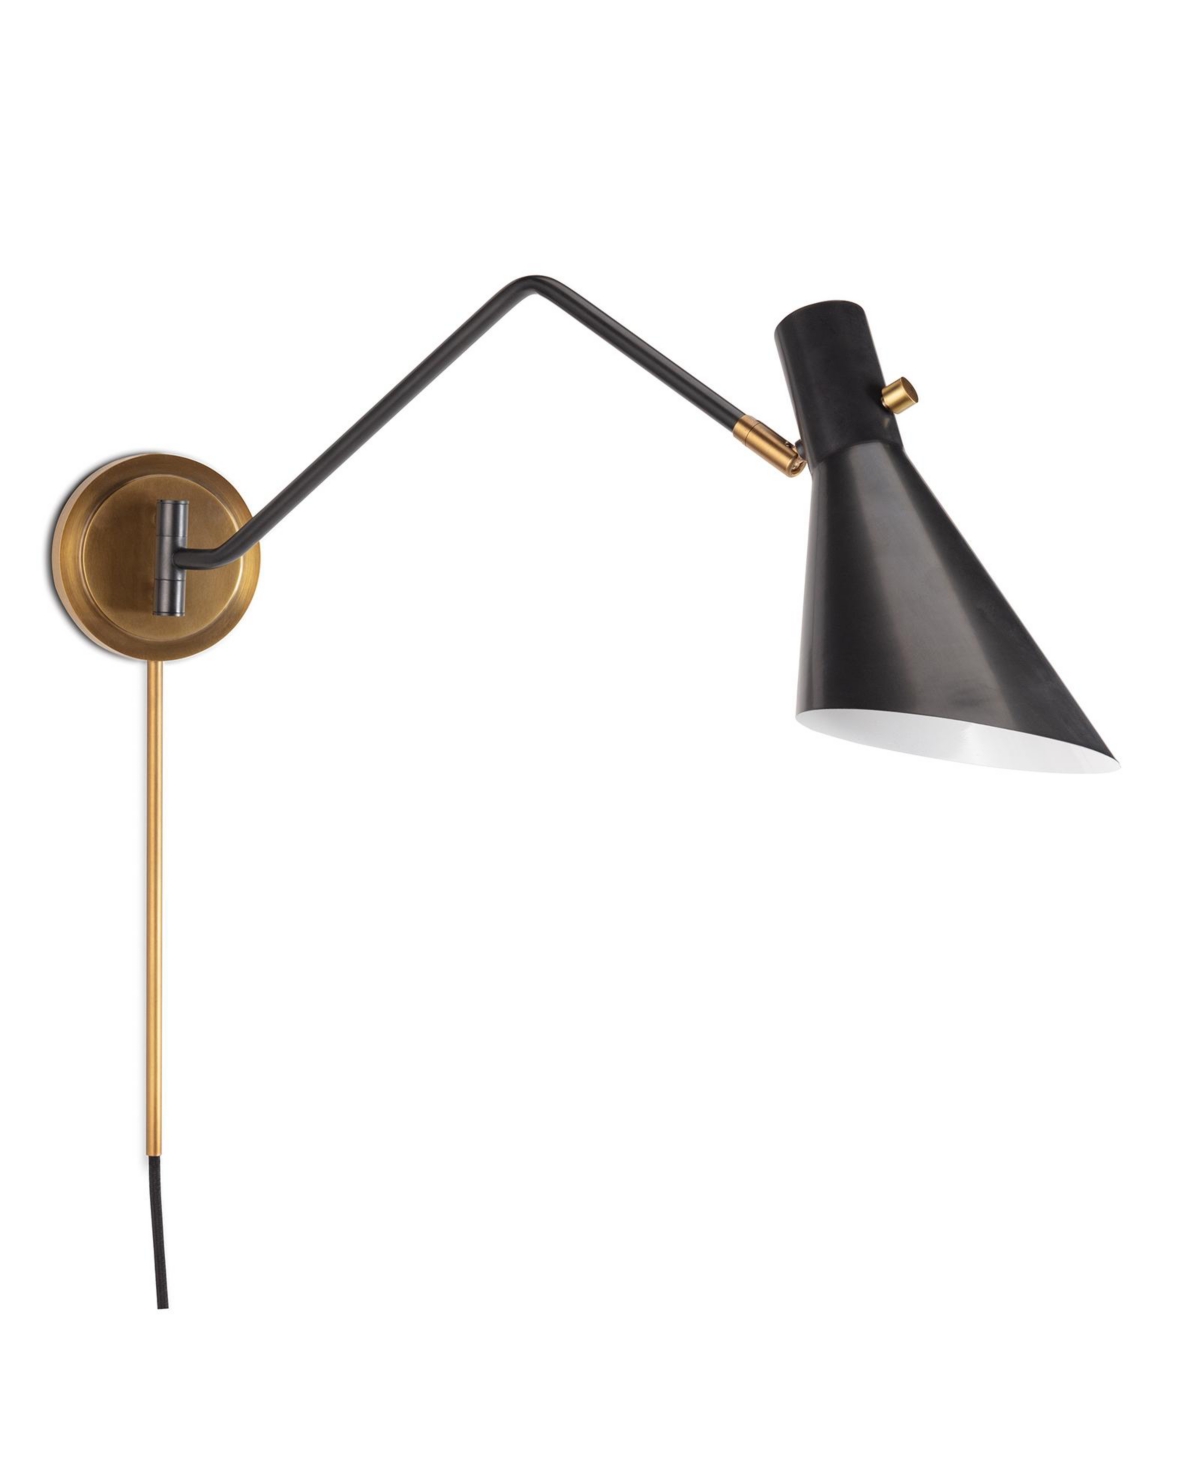 REGINA ANDREW SPYDER SINGLE ARM SCONCE LAMP